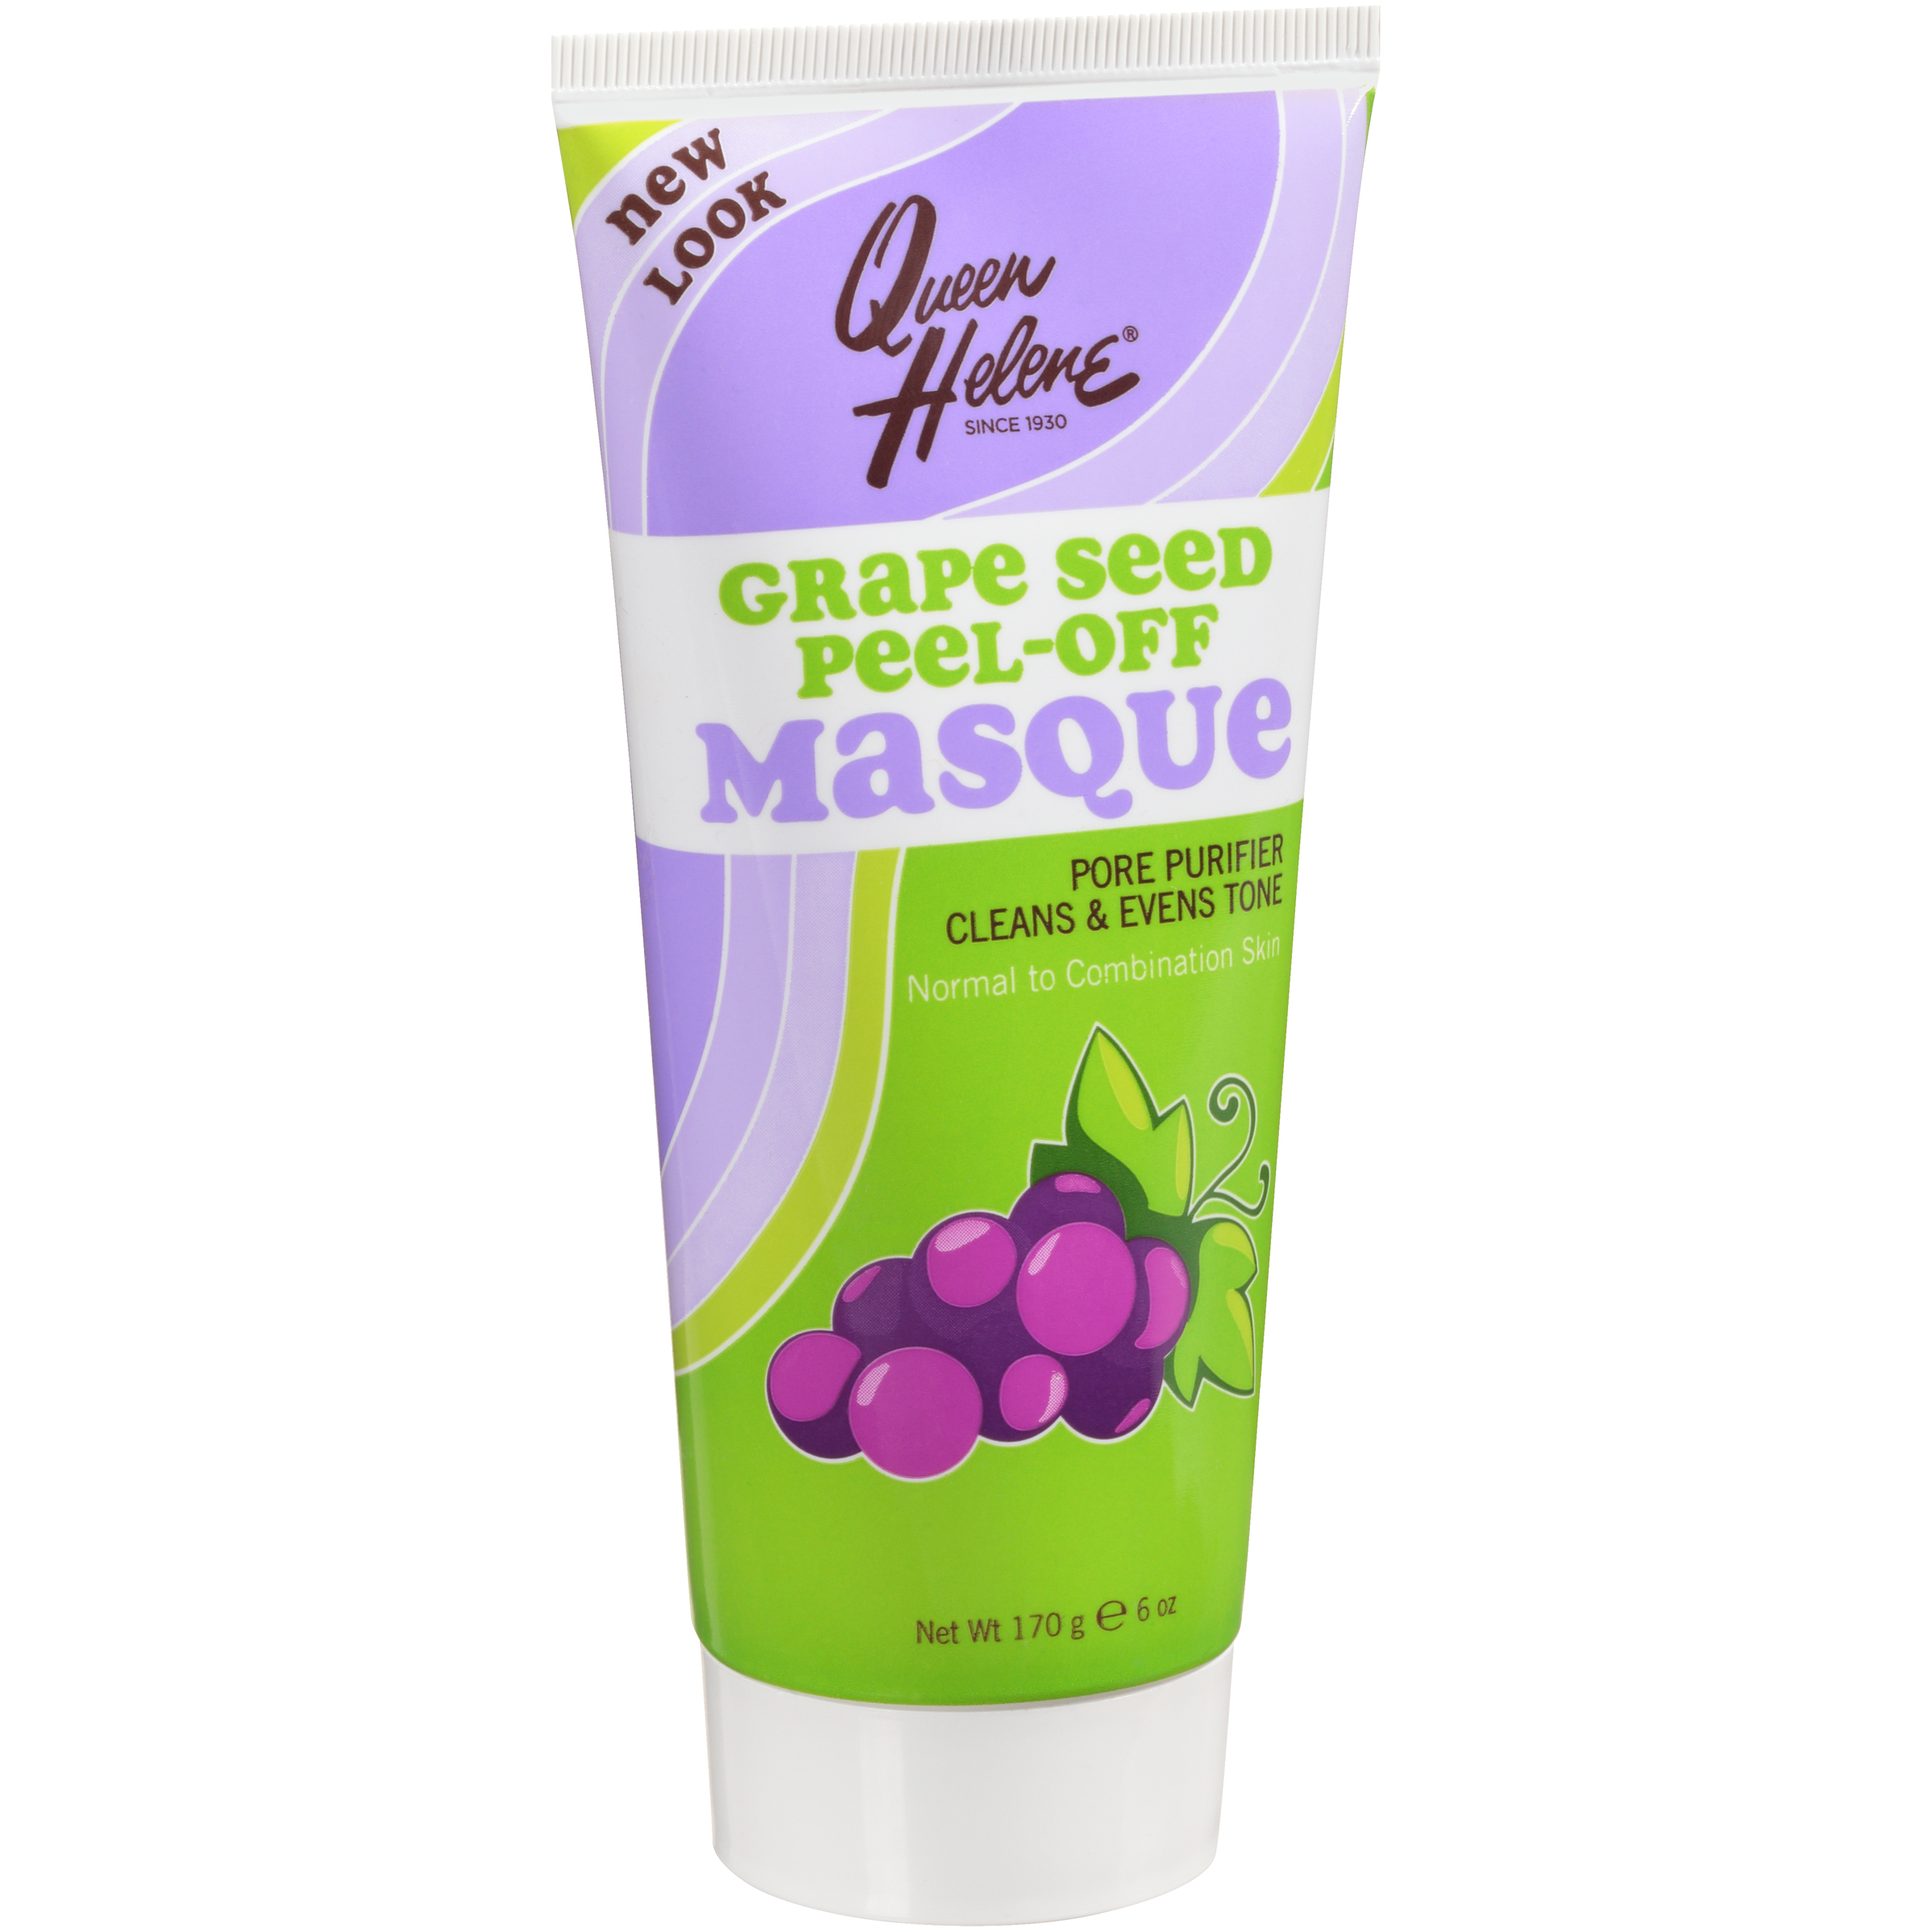 Queen Helene 0107896 Original Formula Antioxidant Grape Seed Extract Peel Off Masque - 6 oz - image 4 of 4